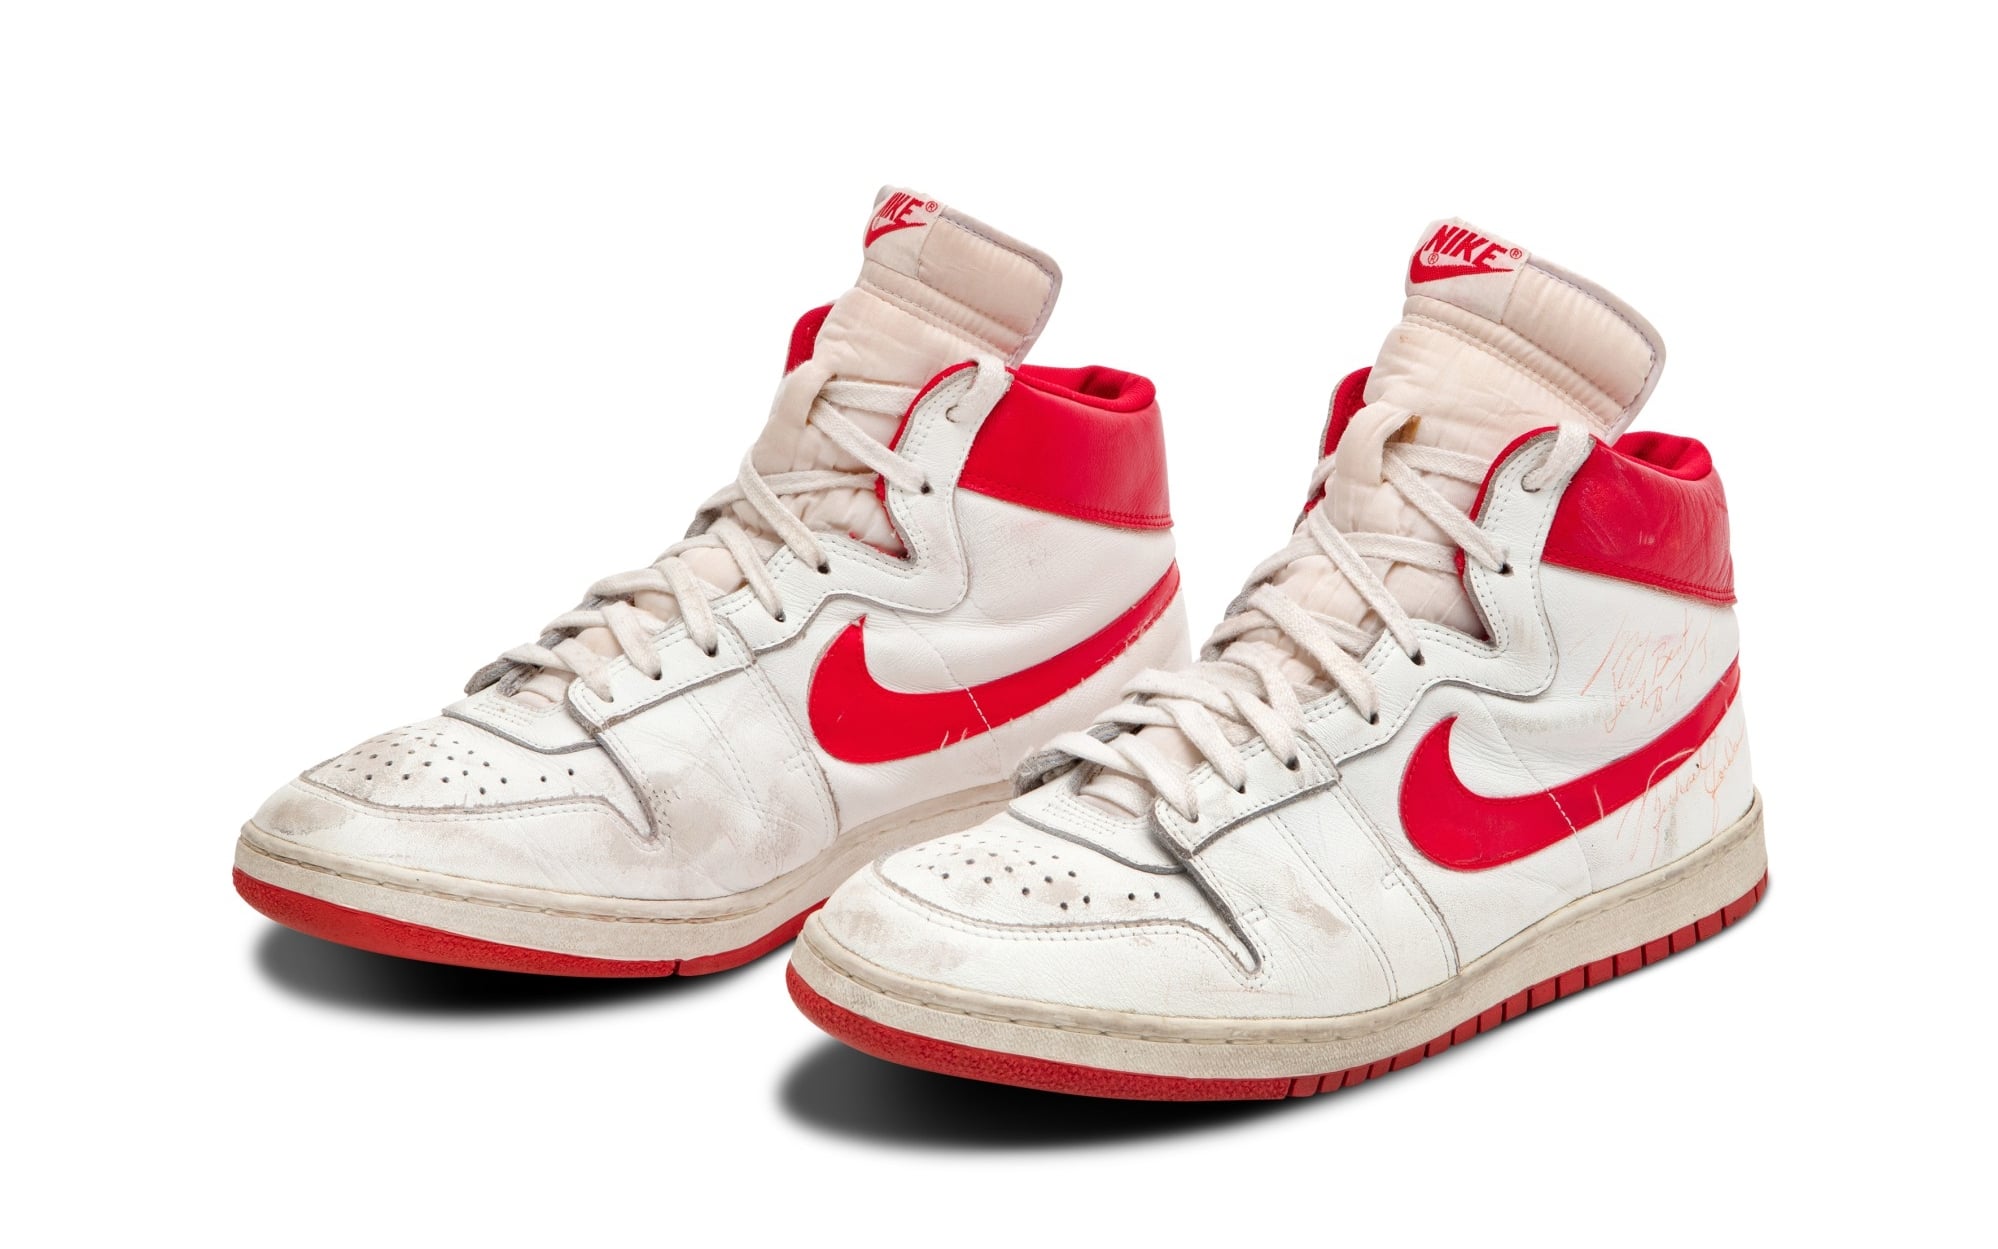 Glad Stoop spise Michael Jordan, le scarpe indossate nel 1984 vendute all'asta per 1,5  milioni di dollari | Sky TG24